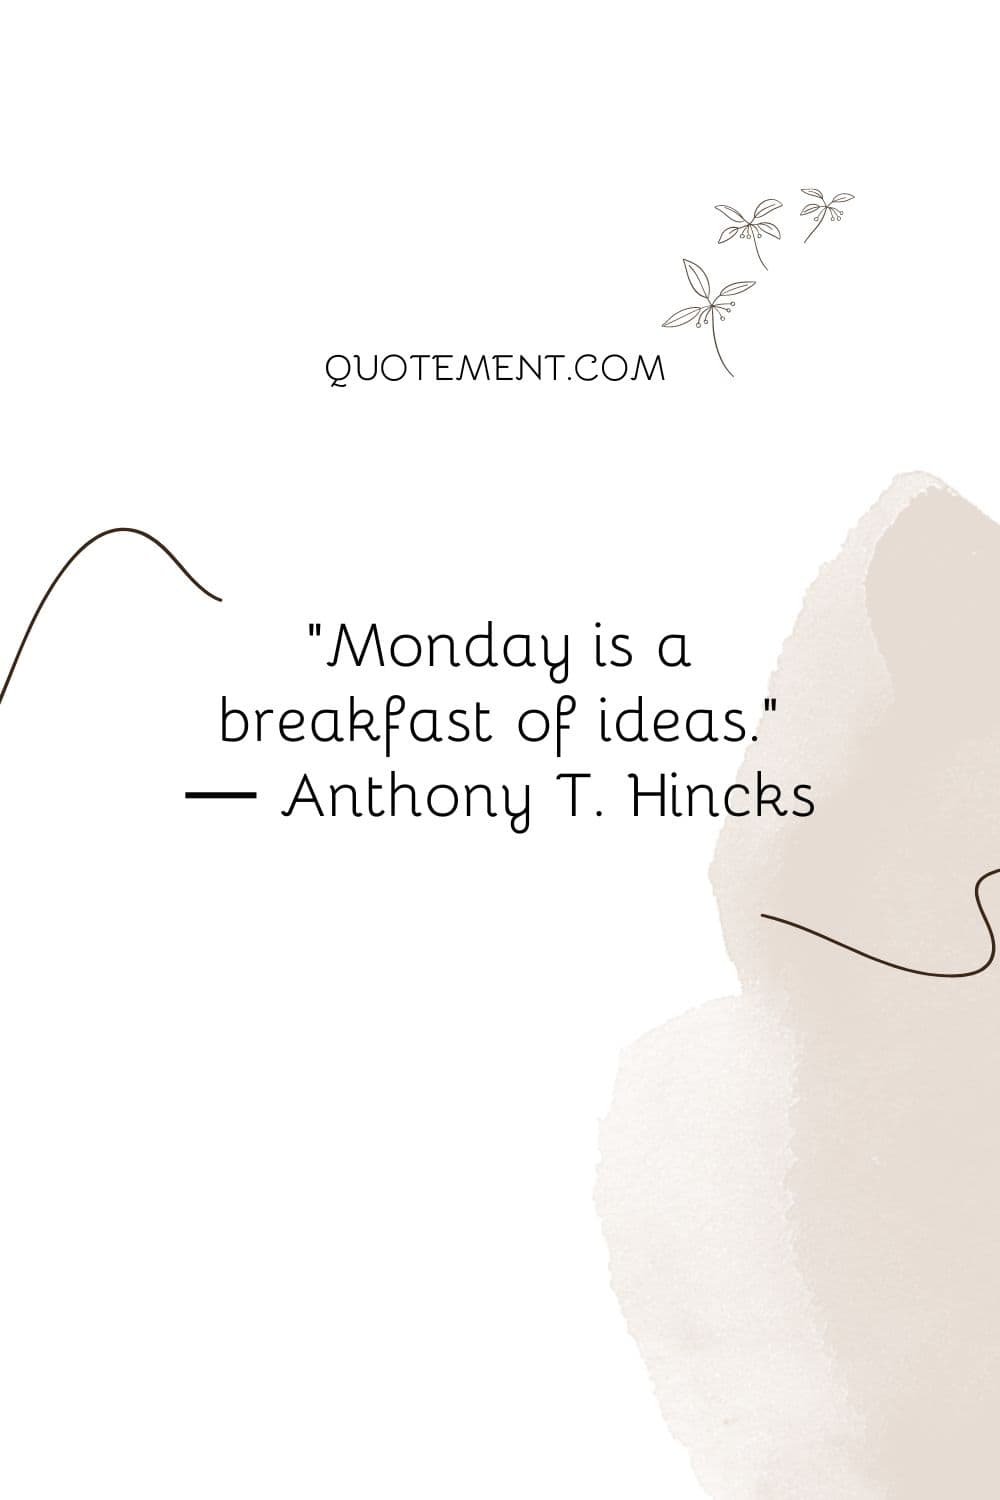 Monday is a breakfast of ideas